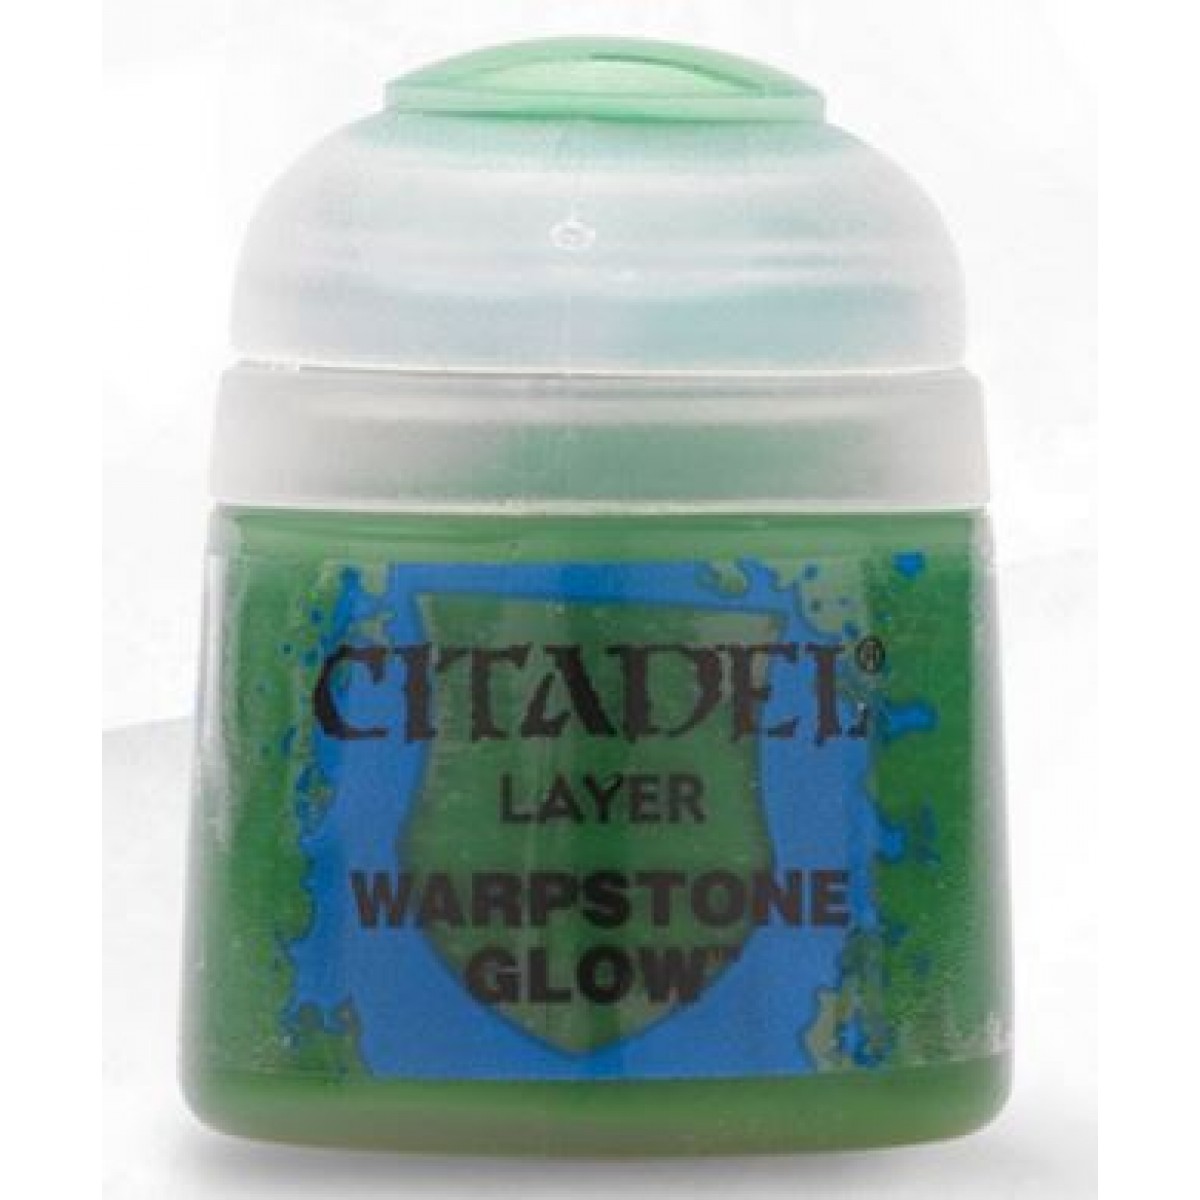 Citadel Paint: Layer - Warpstone Glow